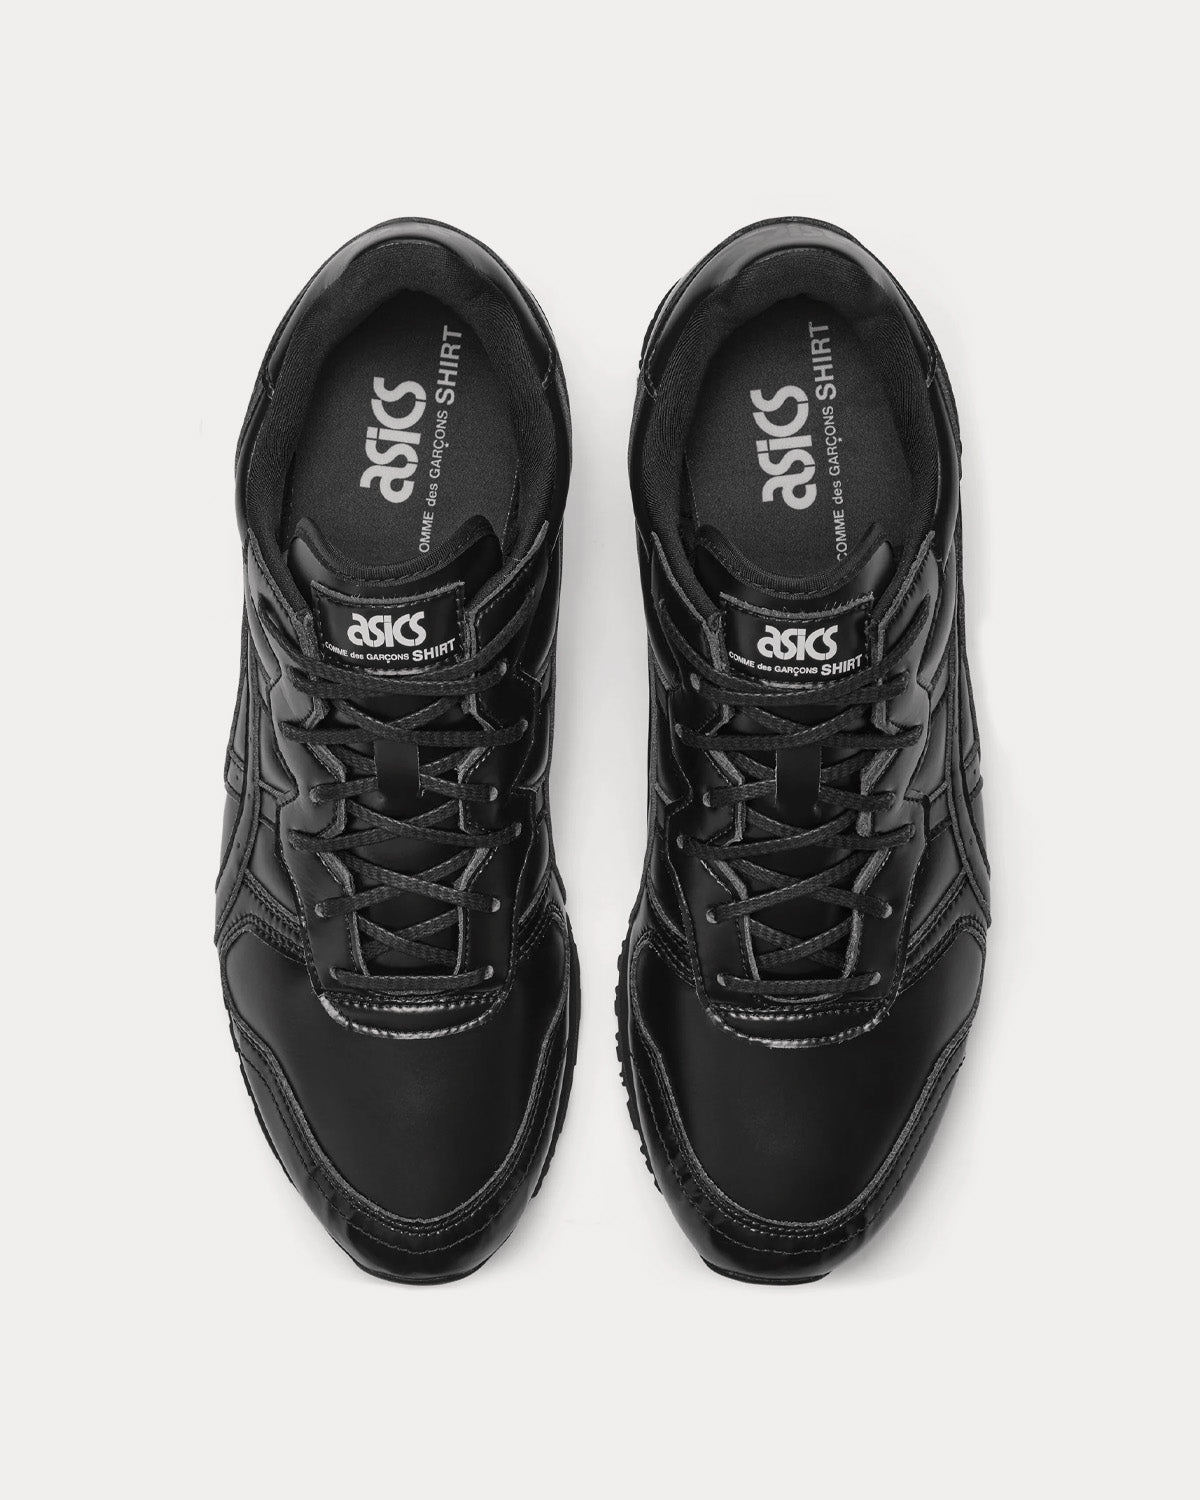 Asics x CDG Shirt - OC Runner Black Low Top Sneakers